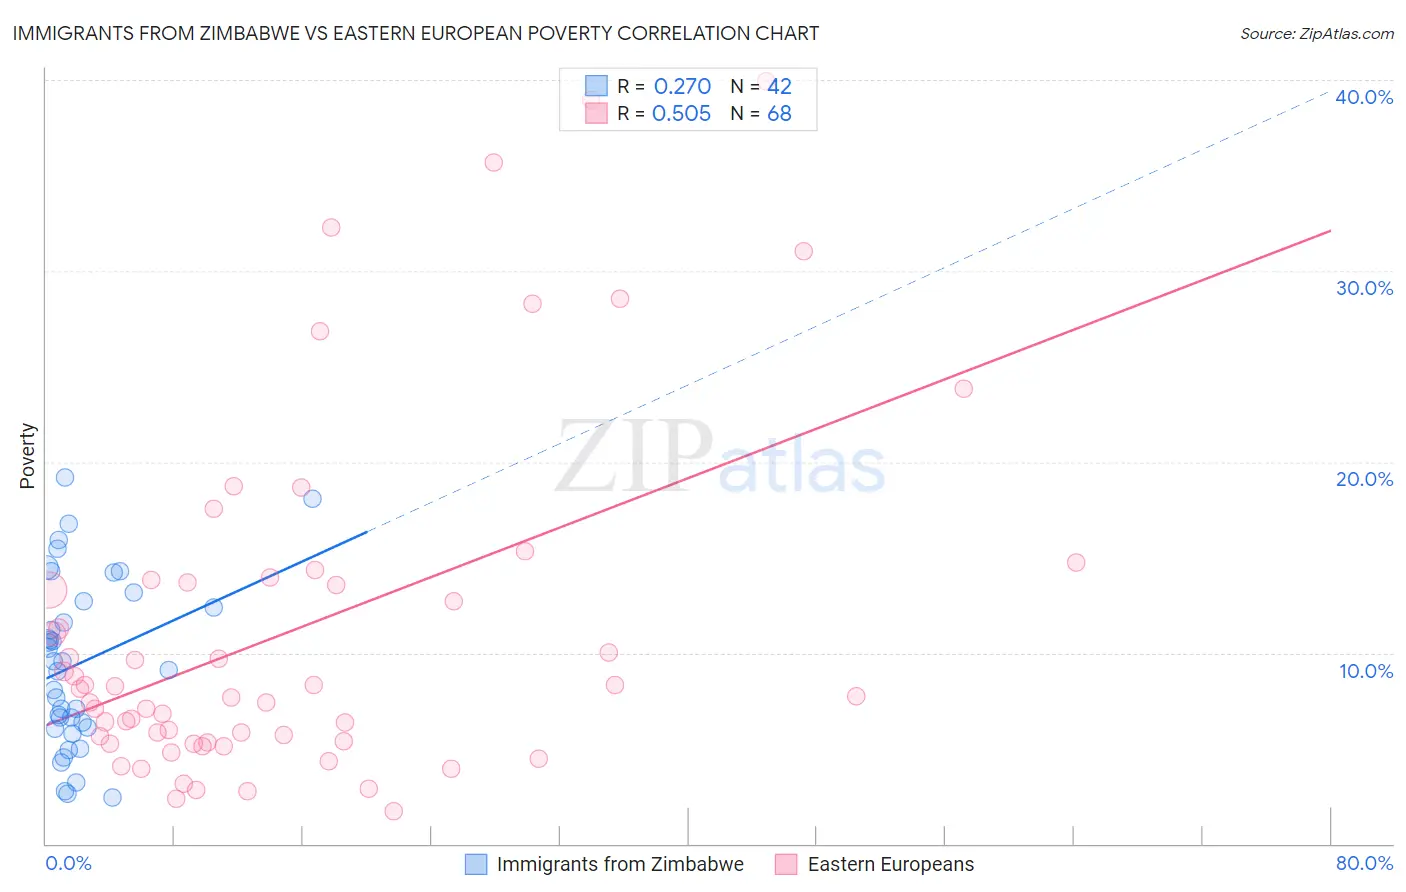 Immigrants from Zimbabwe vs Eastern European Poverty